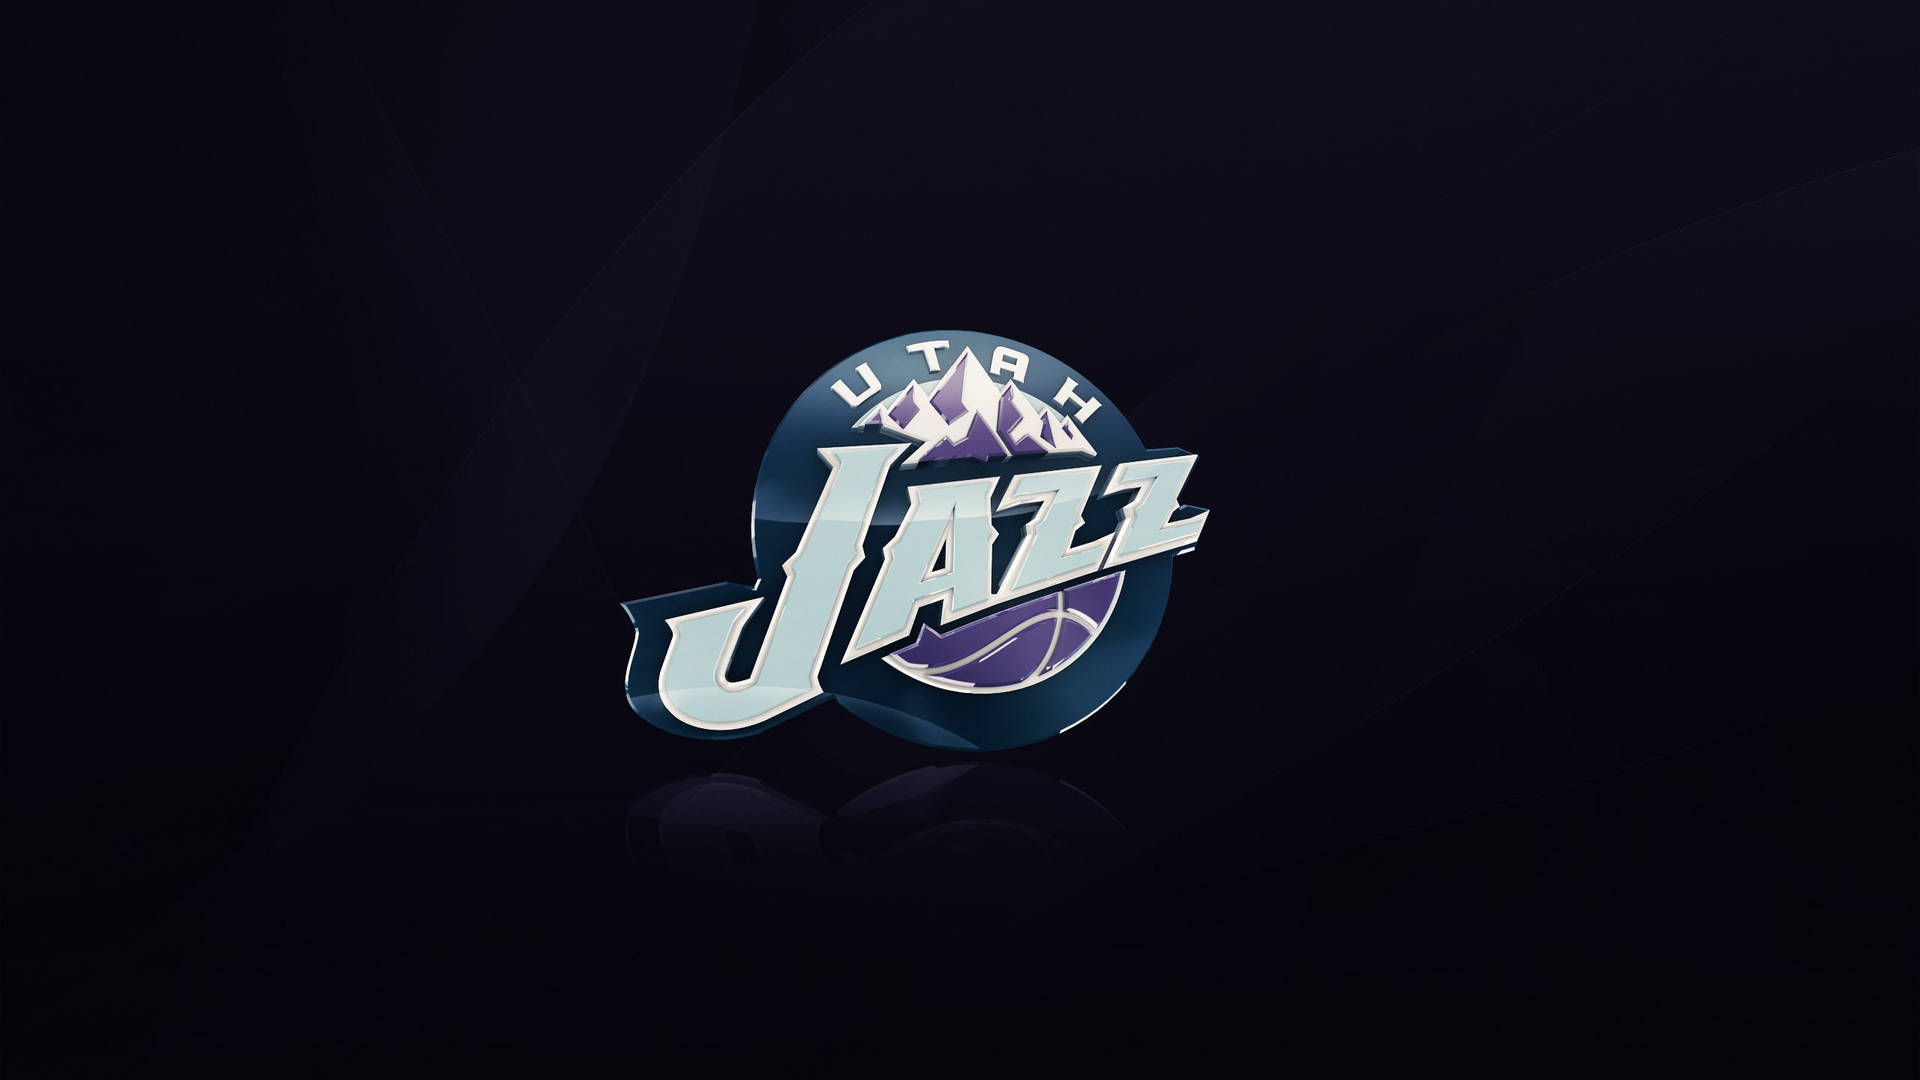 Utah Jazz On Dark Blue Background